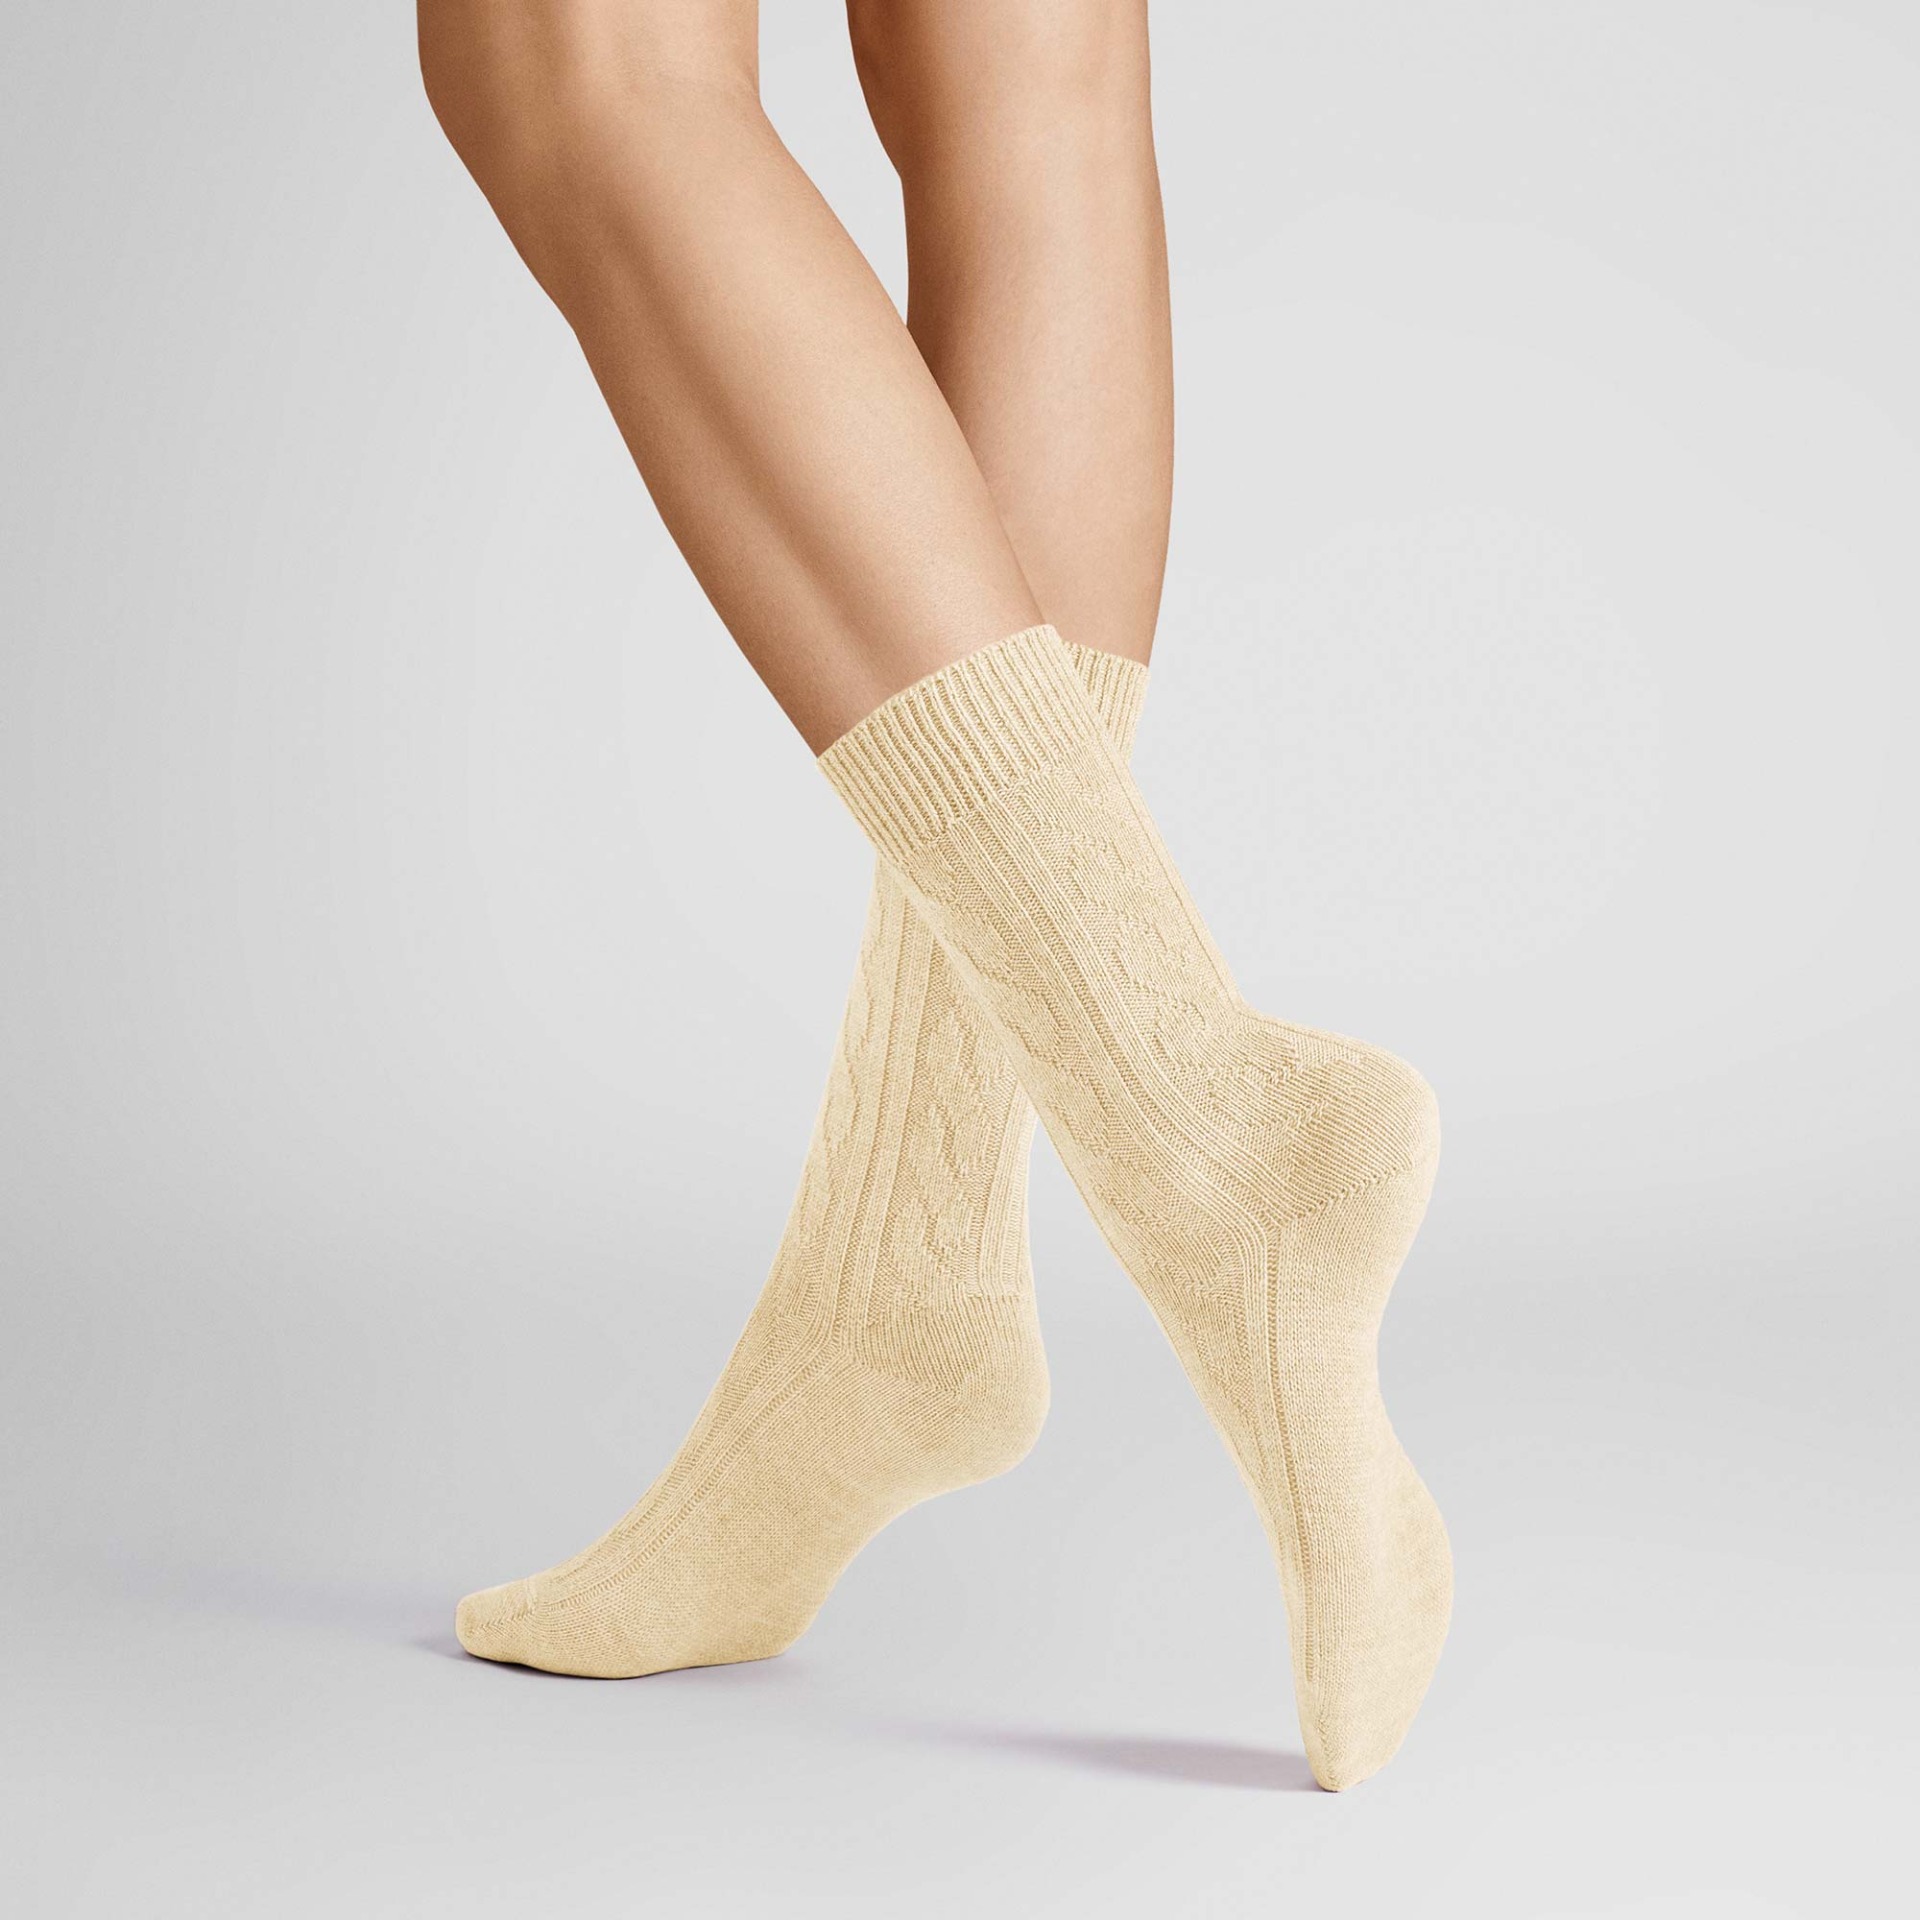 HUDSON Damen WINTER PLAIT -  35/38 - Wärmende Socken mit Zopf-Muster - Biber-mel. (Hell Beige)